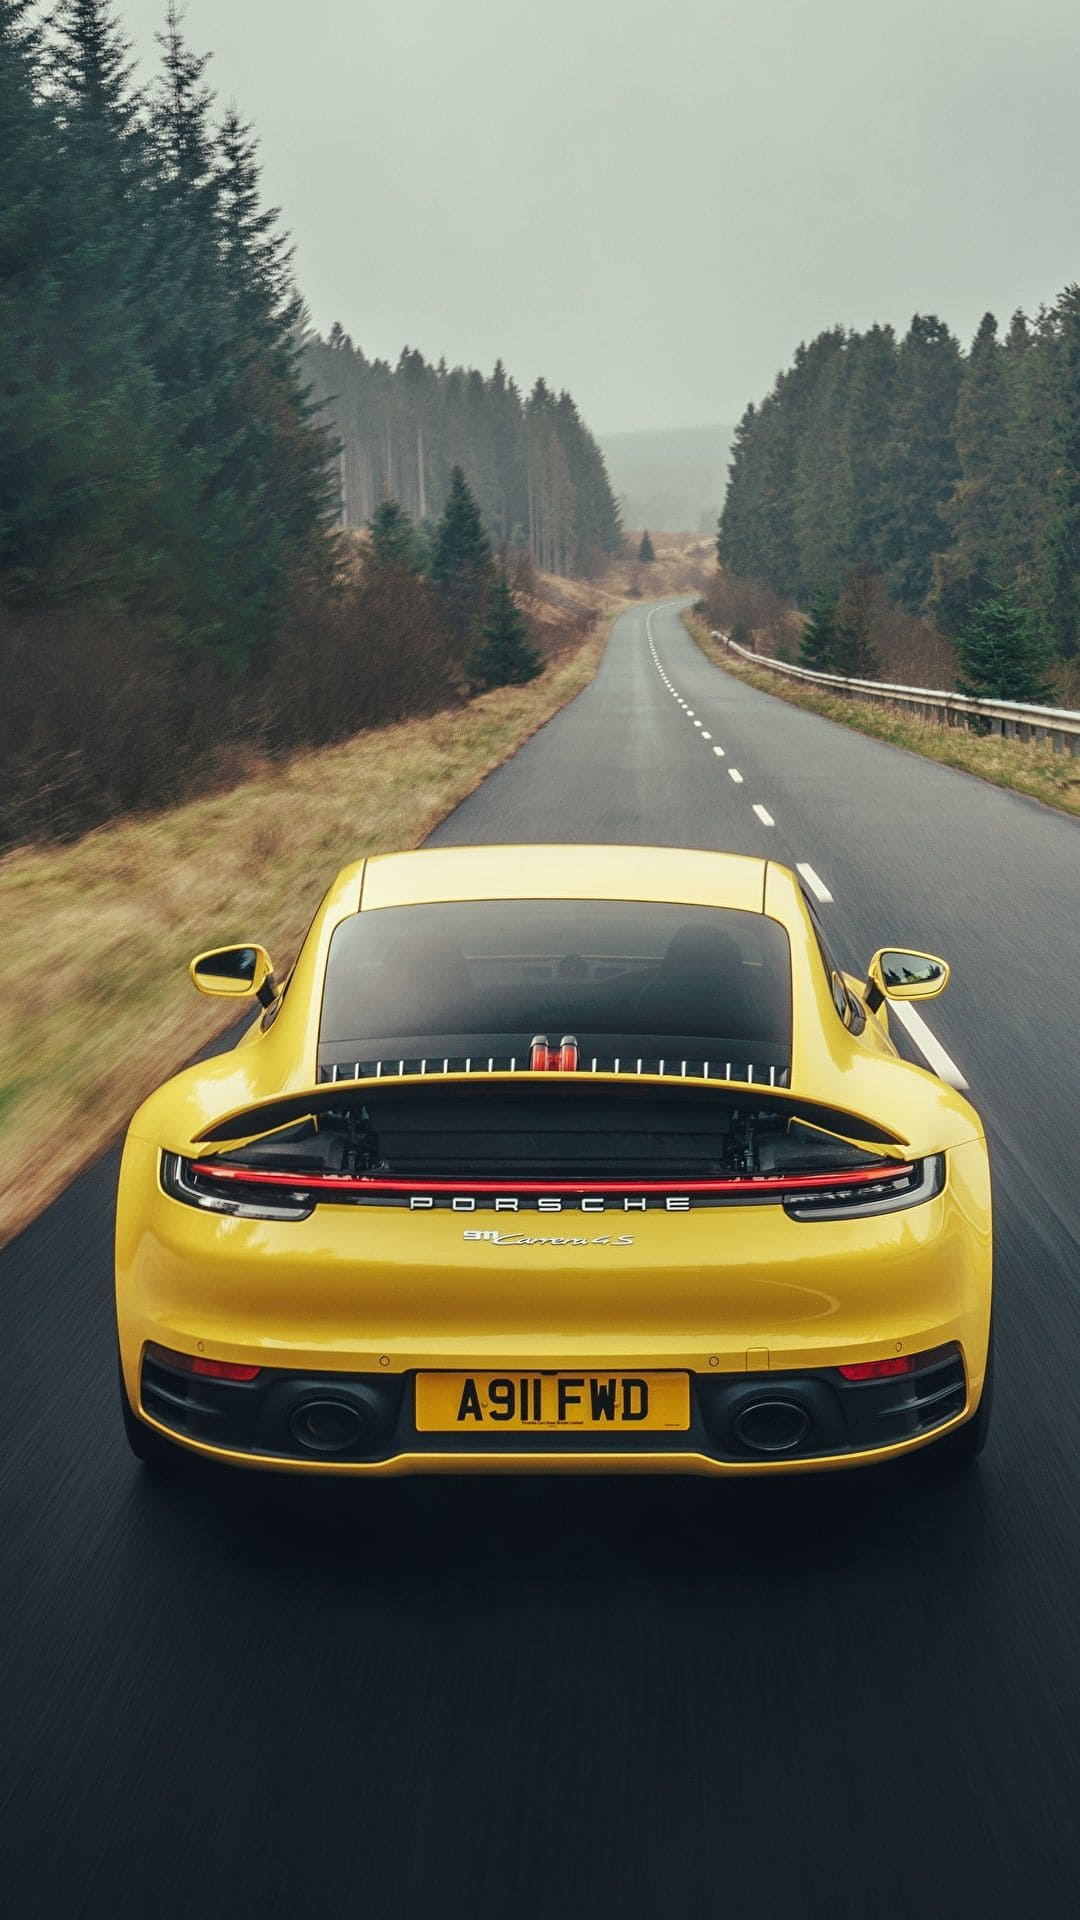 1080x1920 Porsche Wallpapers Top 35 Best Porsche Cars Backgrounds Download